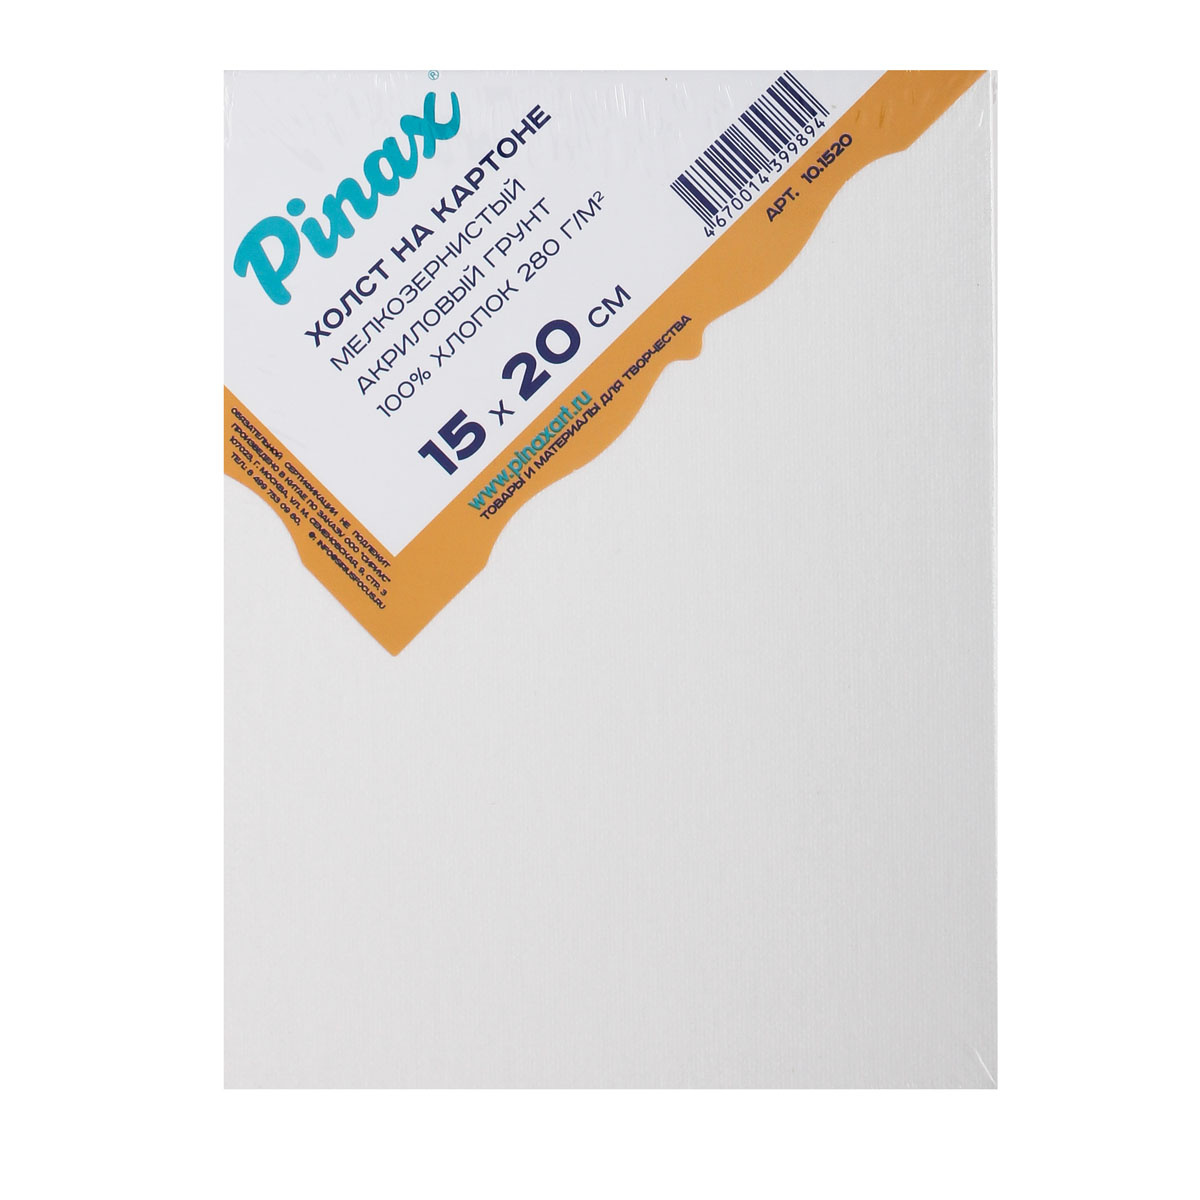 Холст грунтованный на картоне Pinax 280 г 15x20 см холст грунтованный на картоне pinax 280 г